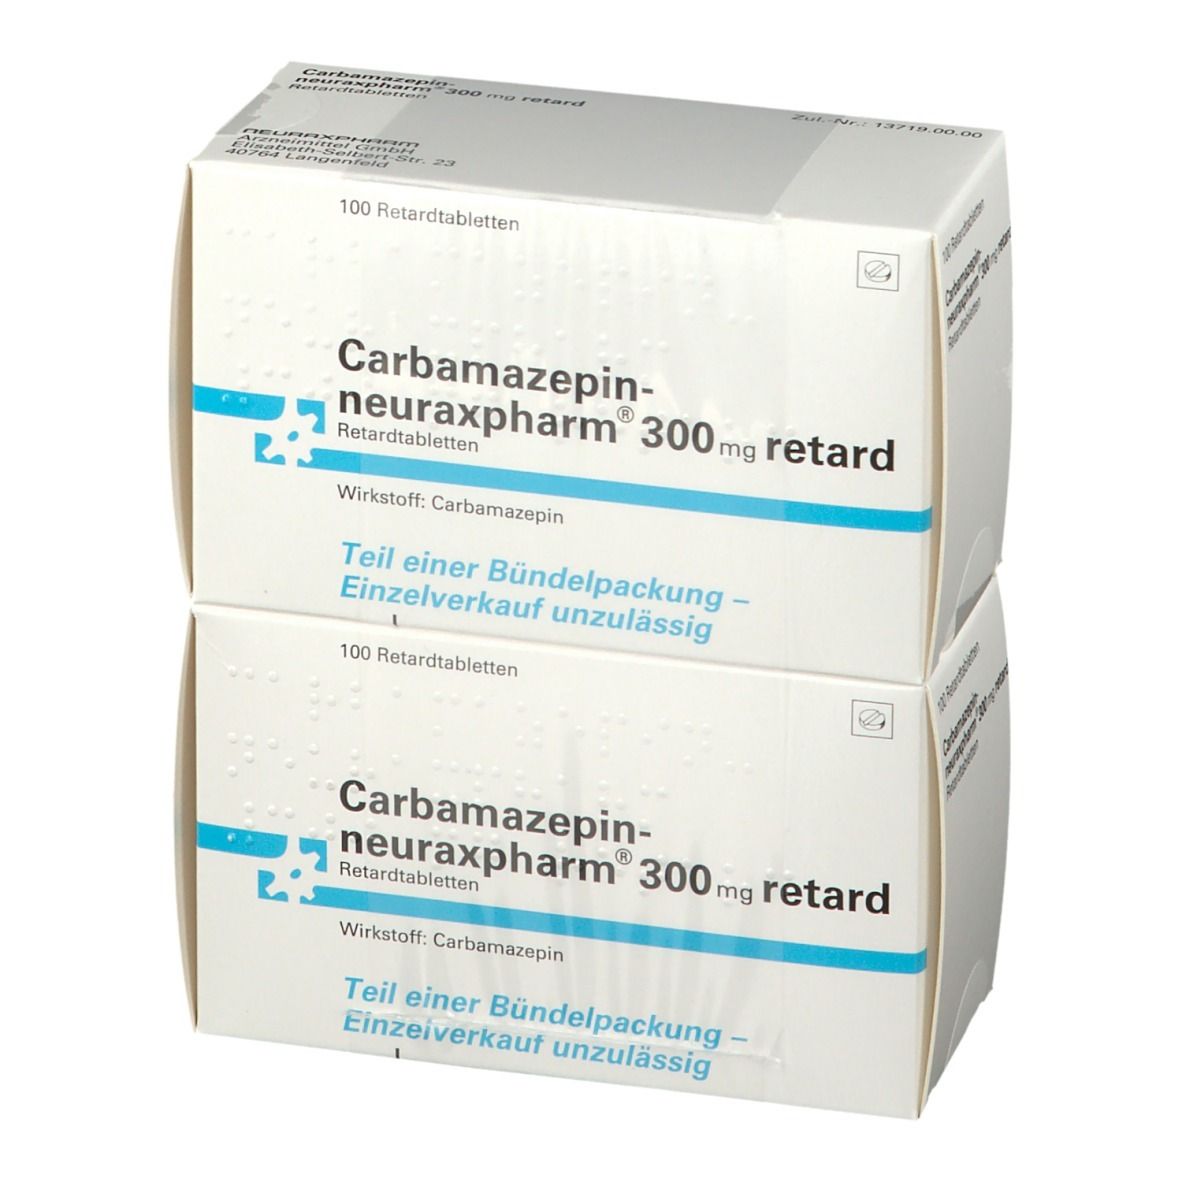 Carbamazepin-neuraxpharm® 300 mg retard